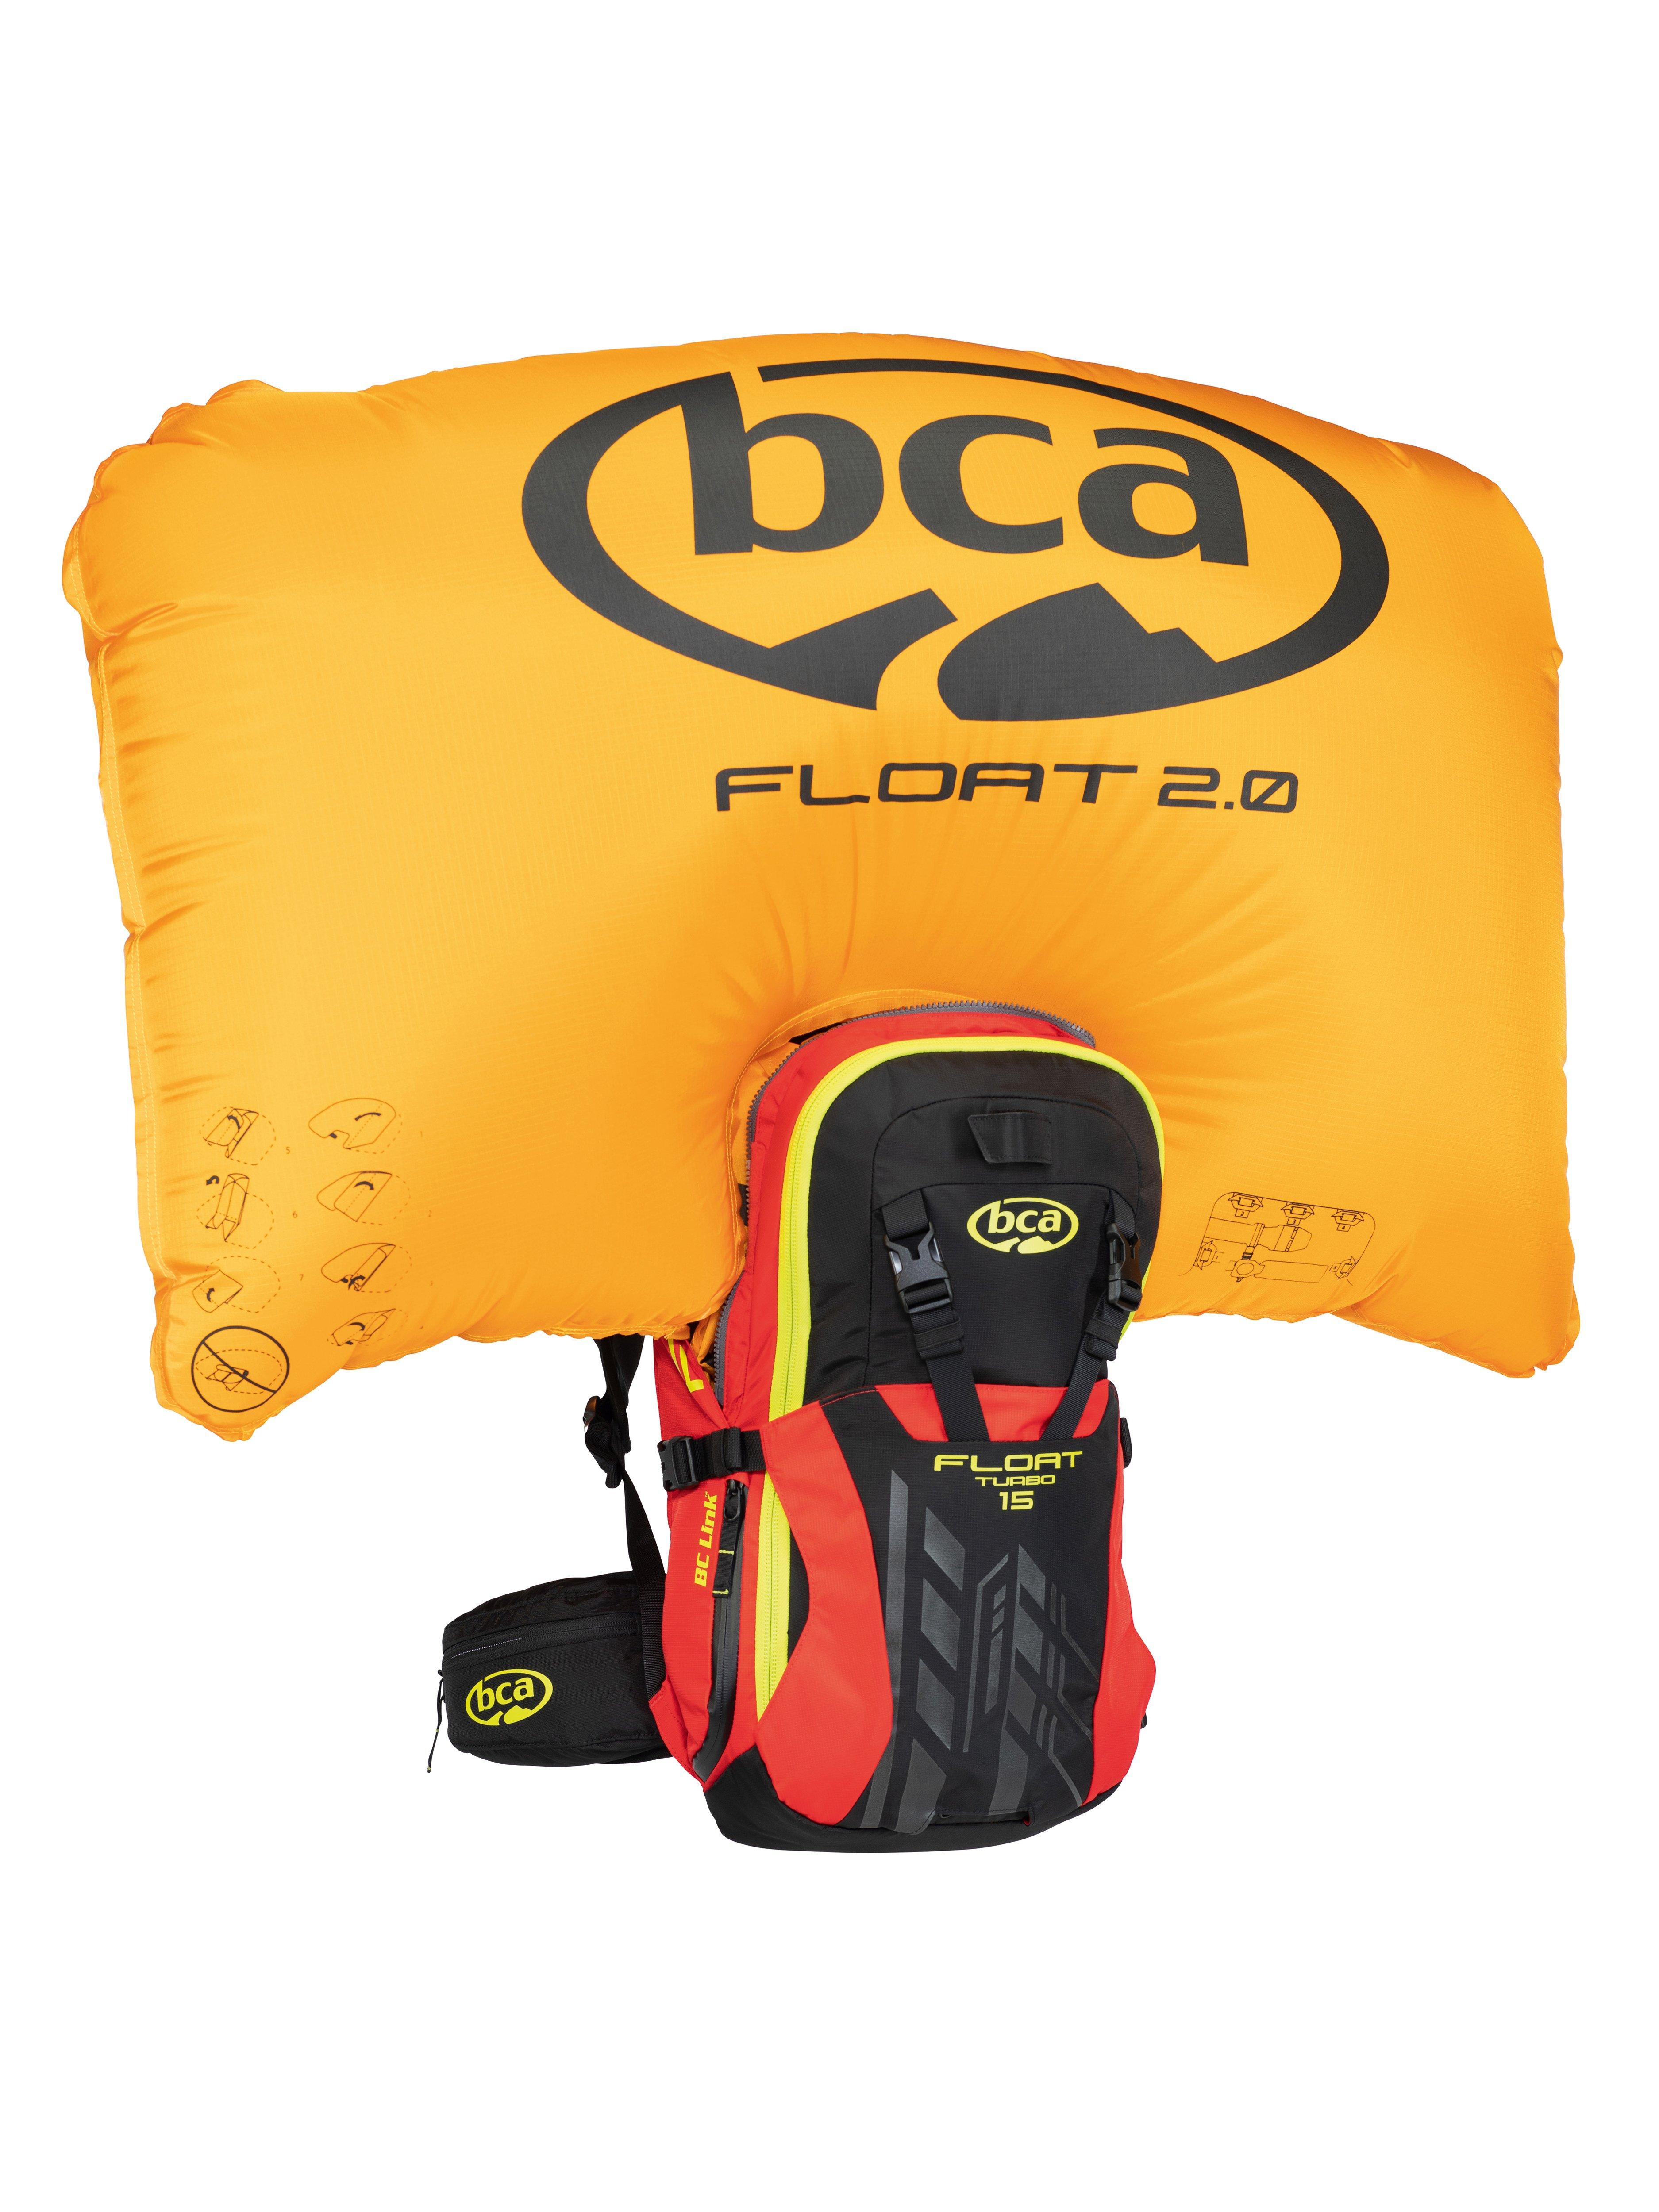 BCA FLOAT8 アバランチ エアバッグ 正規品